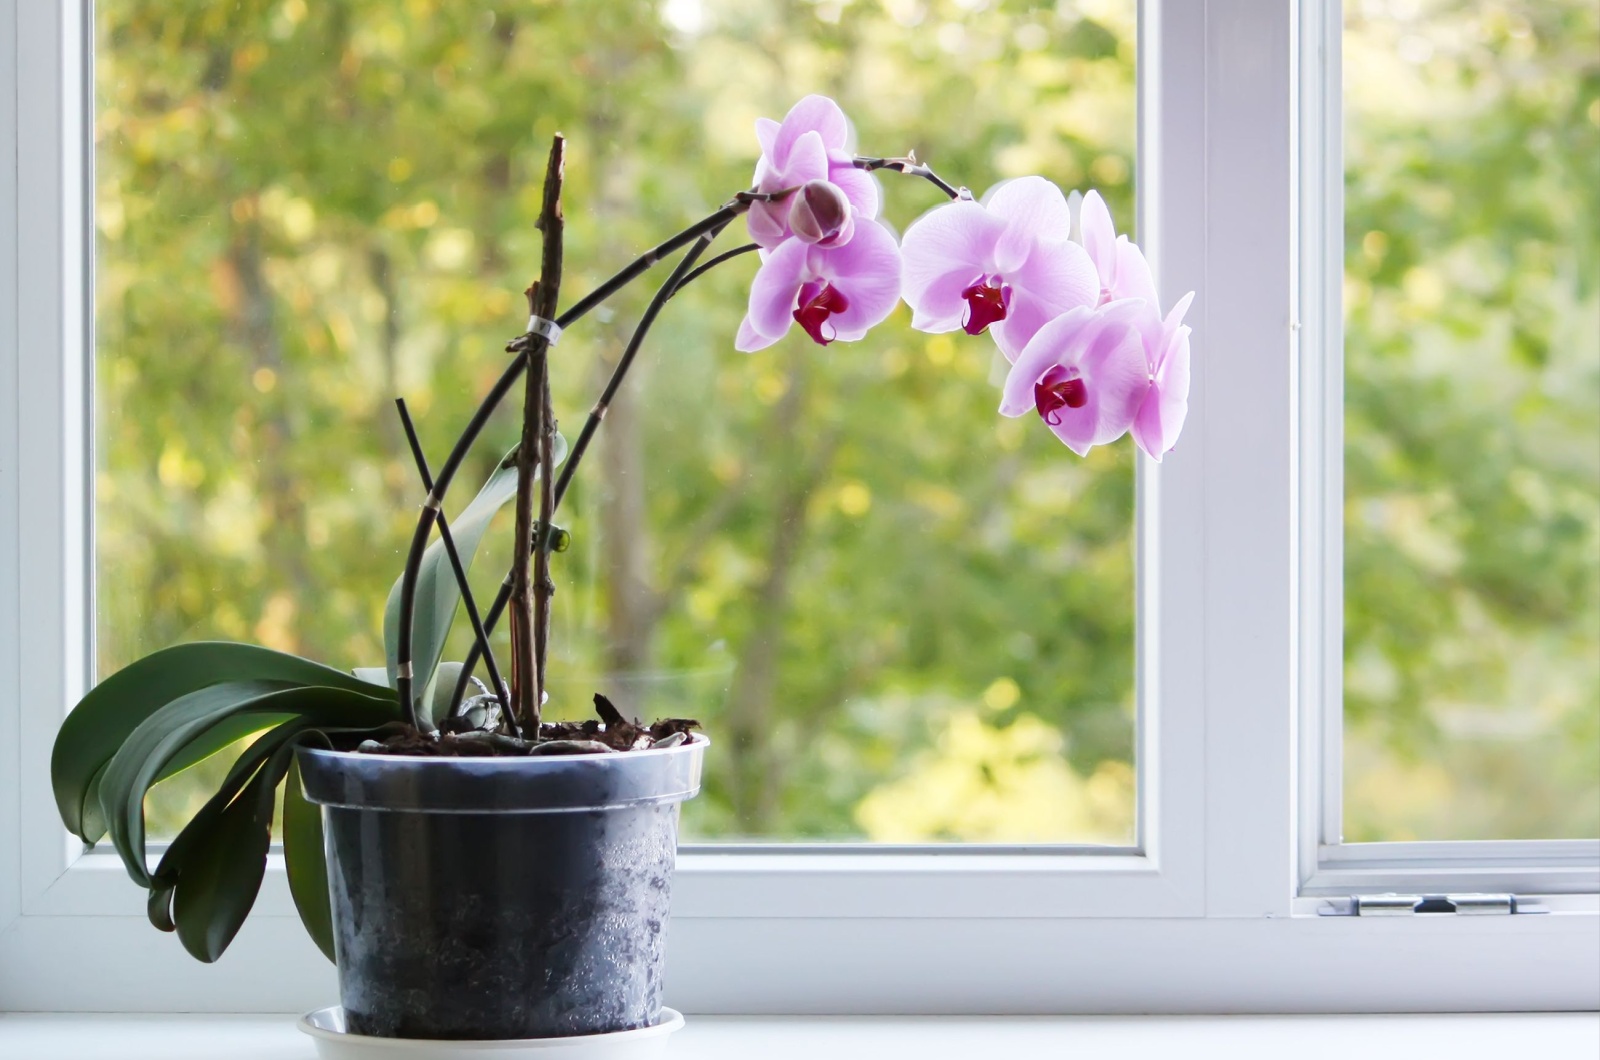 Purple orchid flower on the window sill